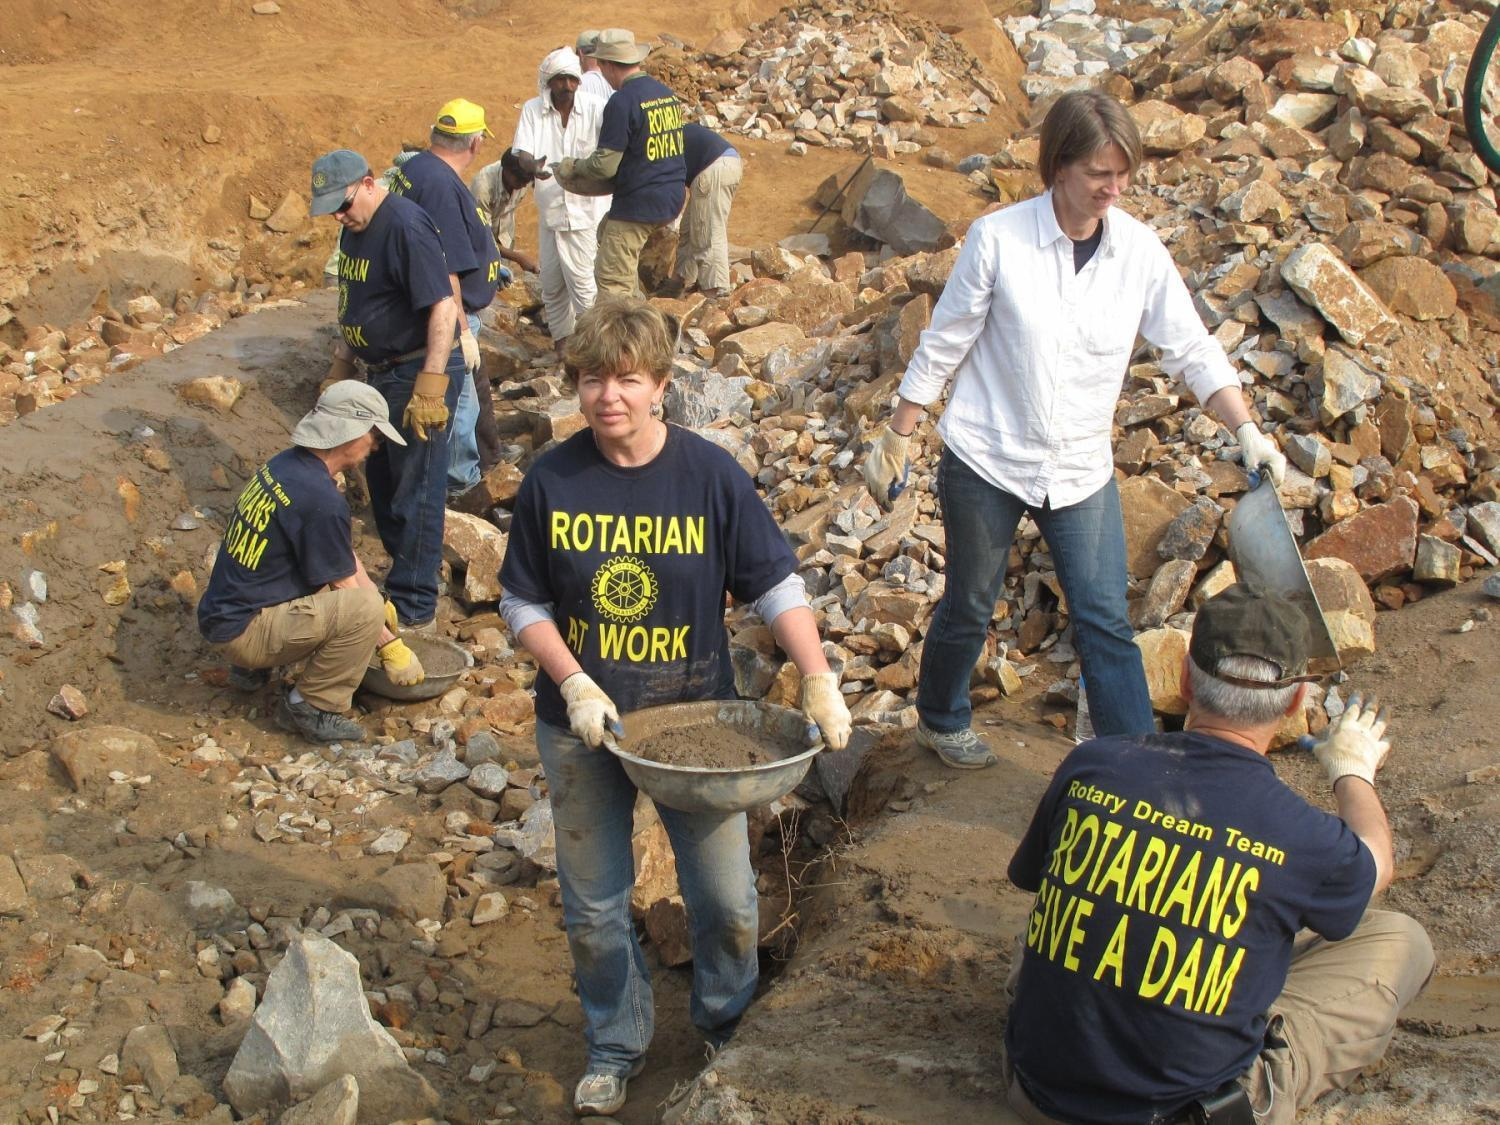 Rotarians Building a Dam in